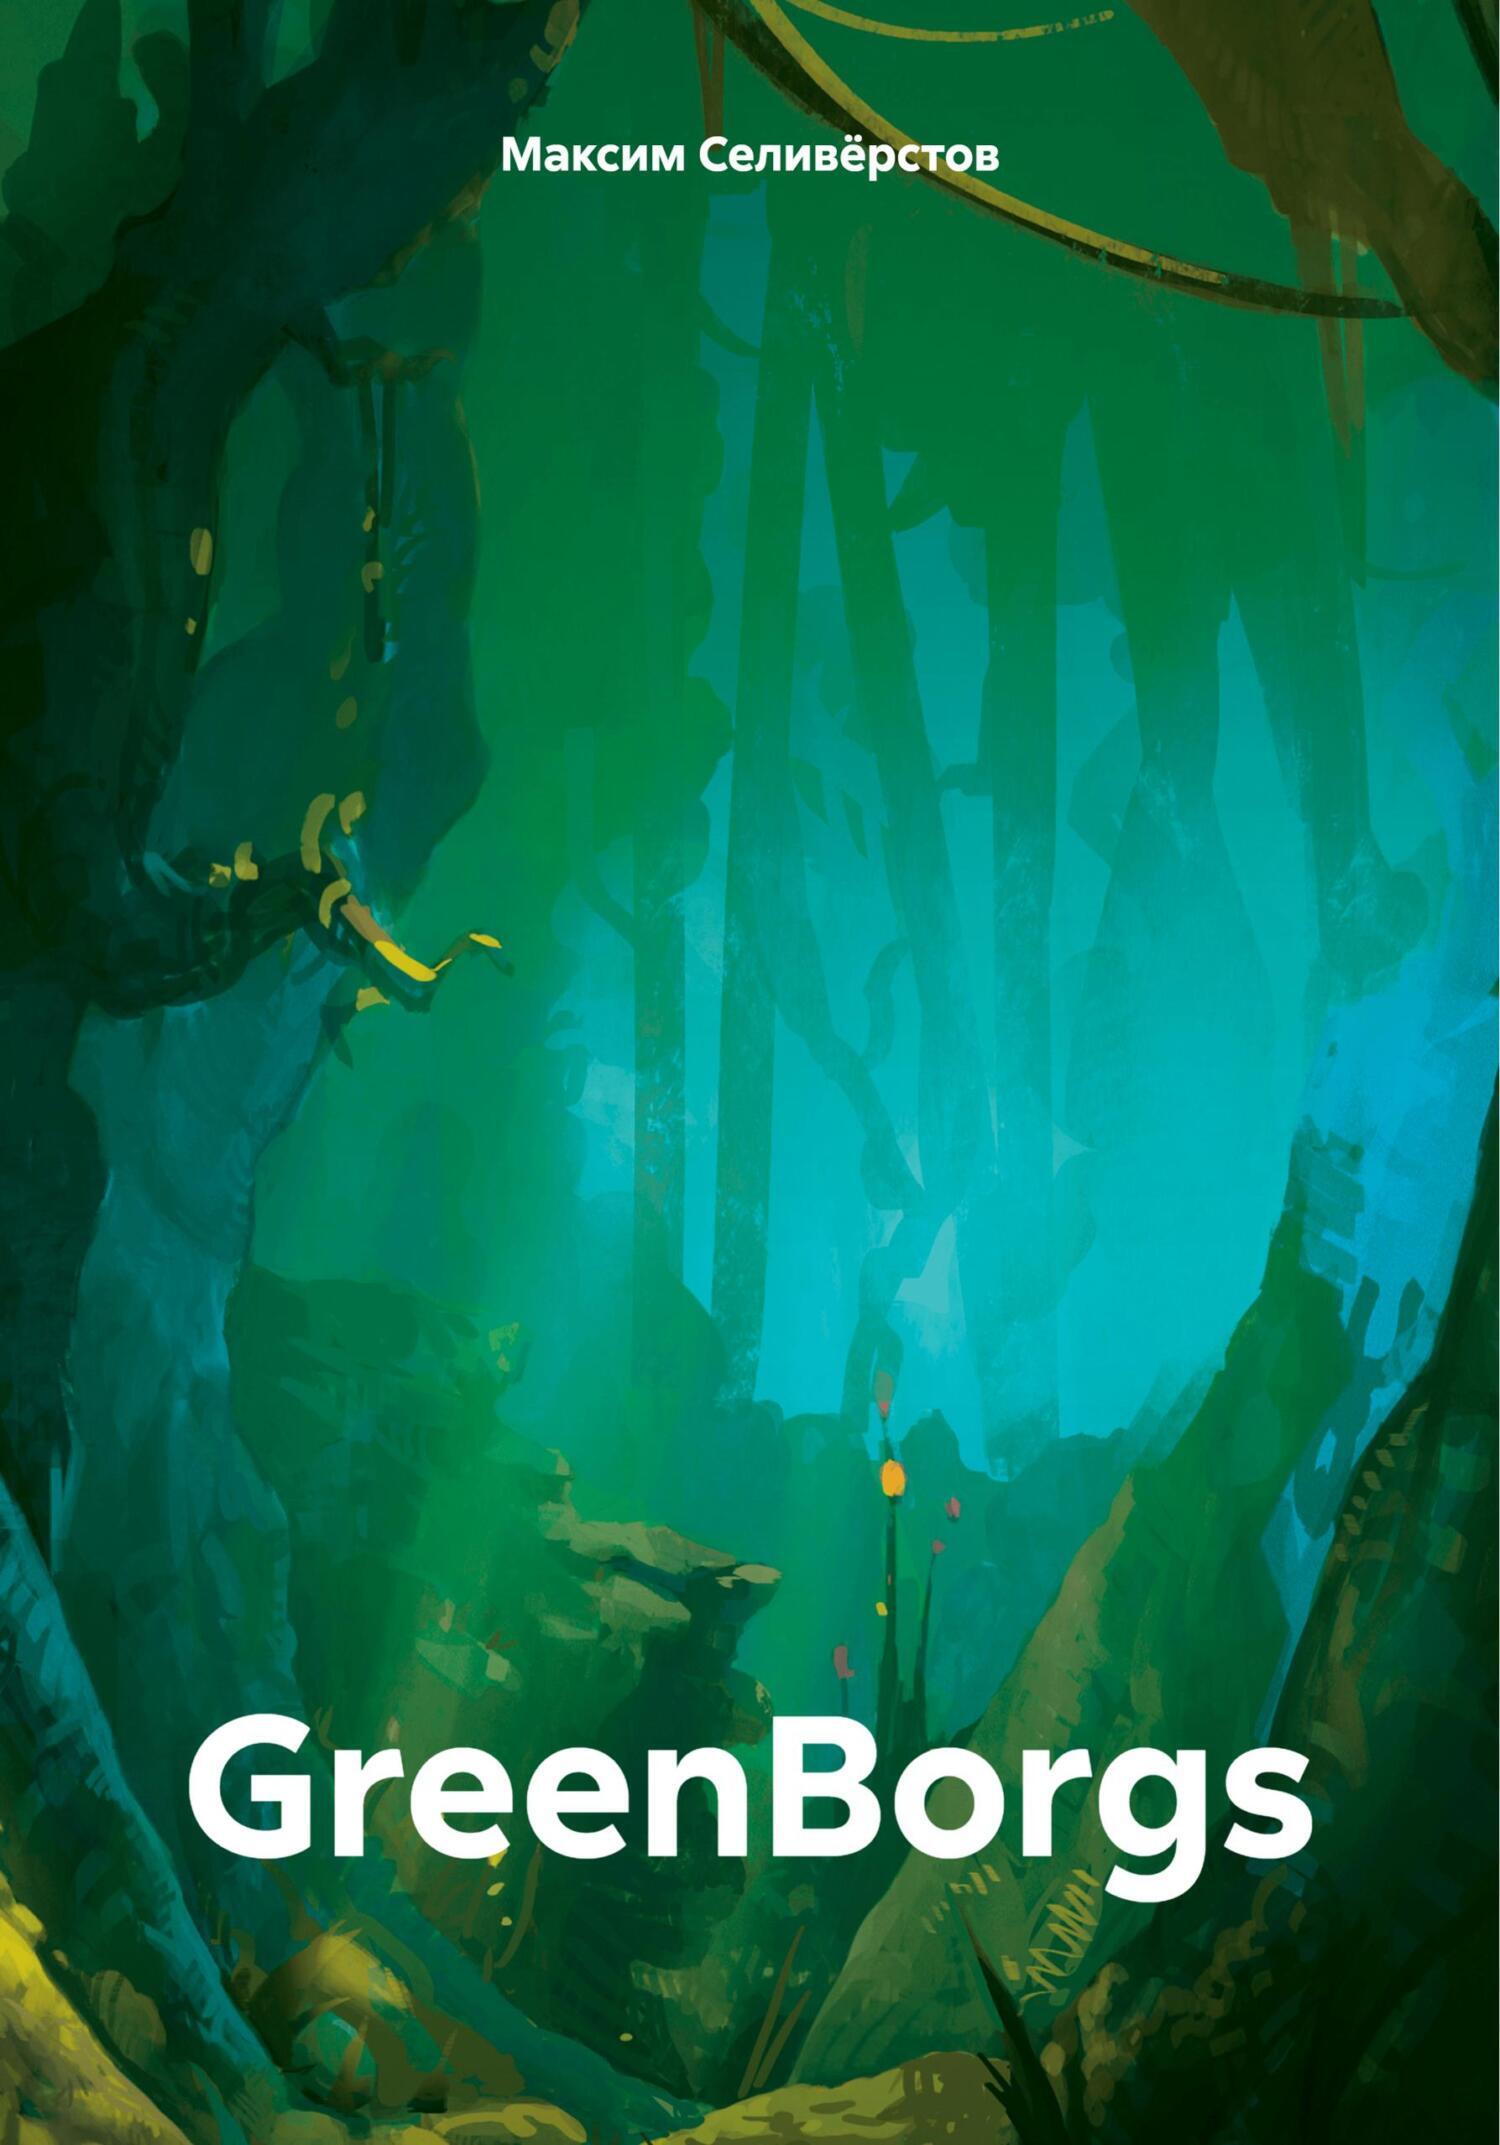 GreenBorgs